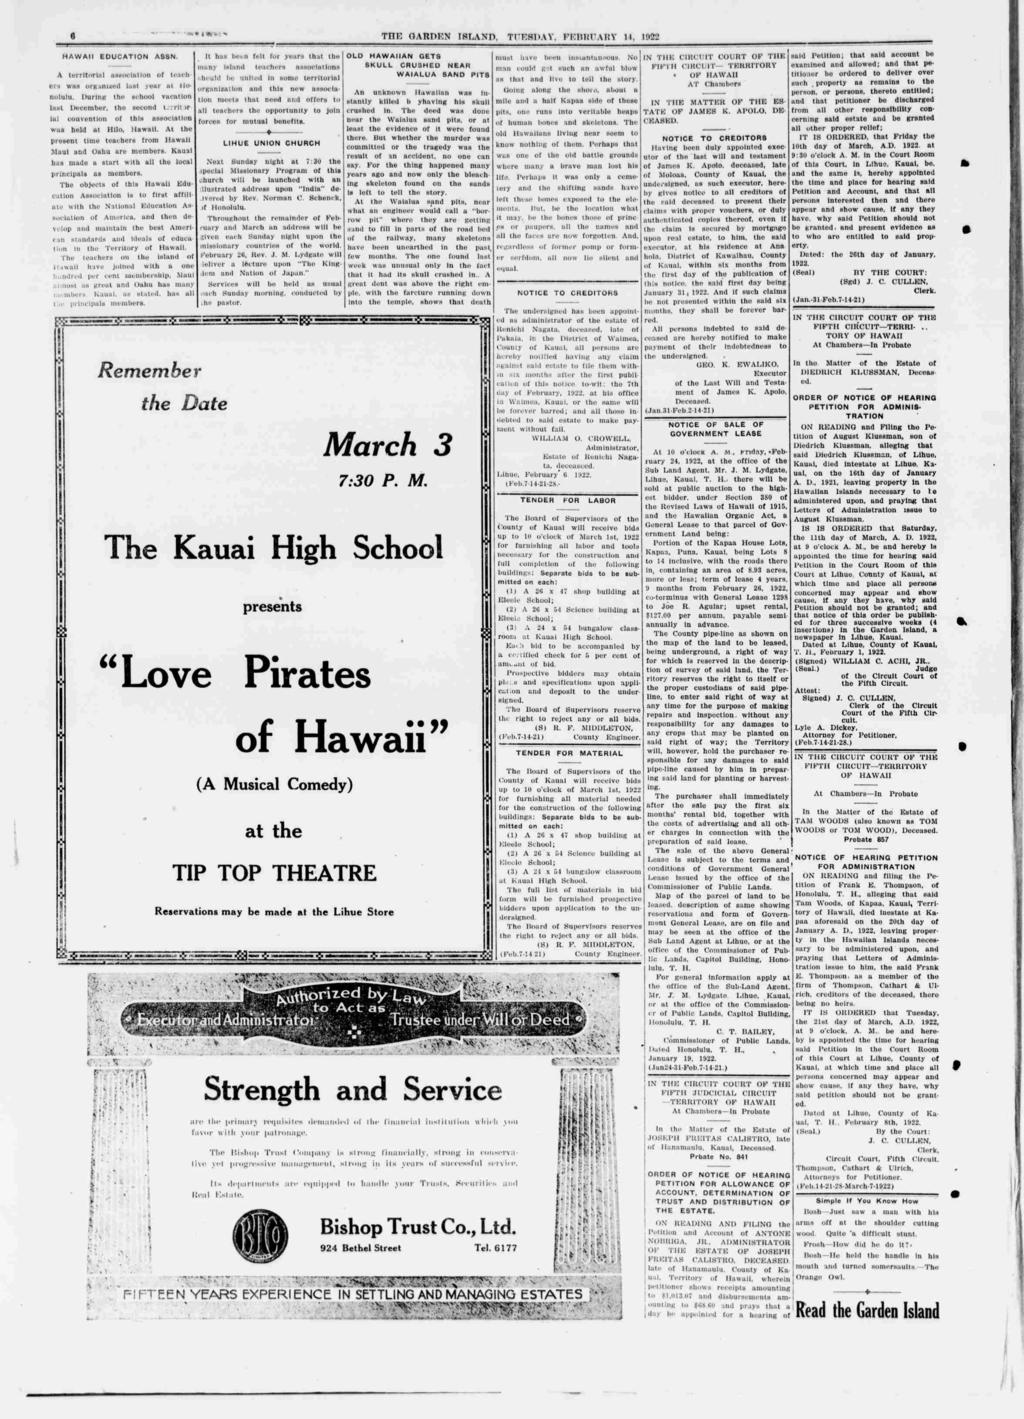 HAWA EDUCATON ASSN. A terrtoral assocaton of teachers was organzed lust year at Honolulu.